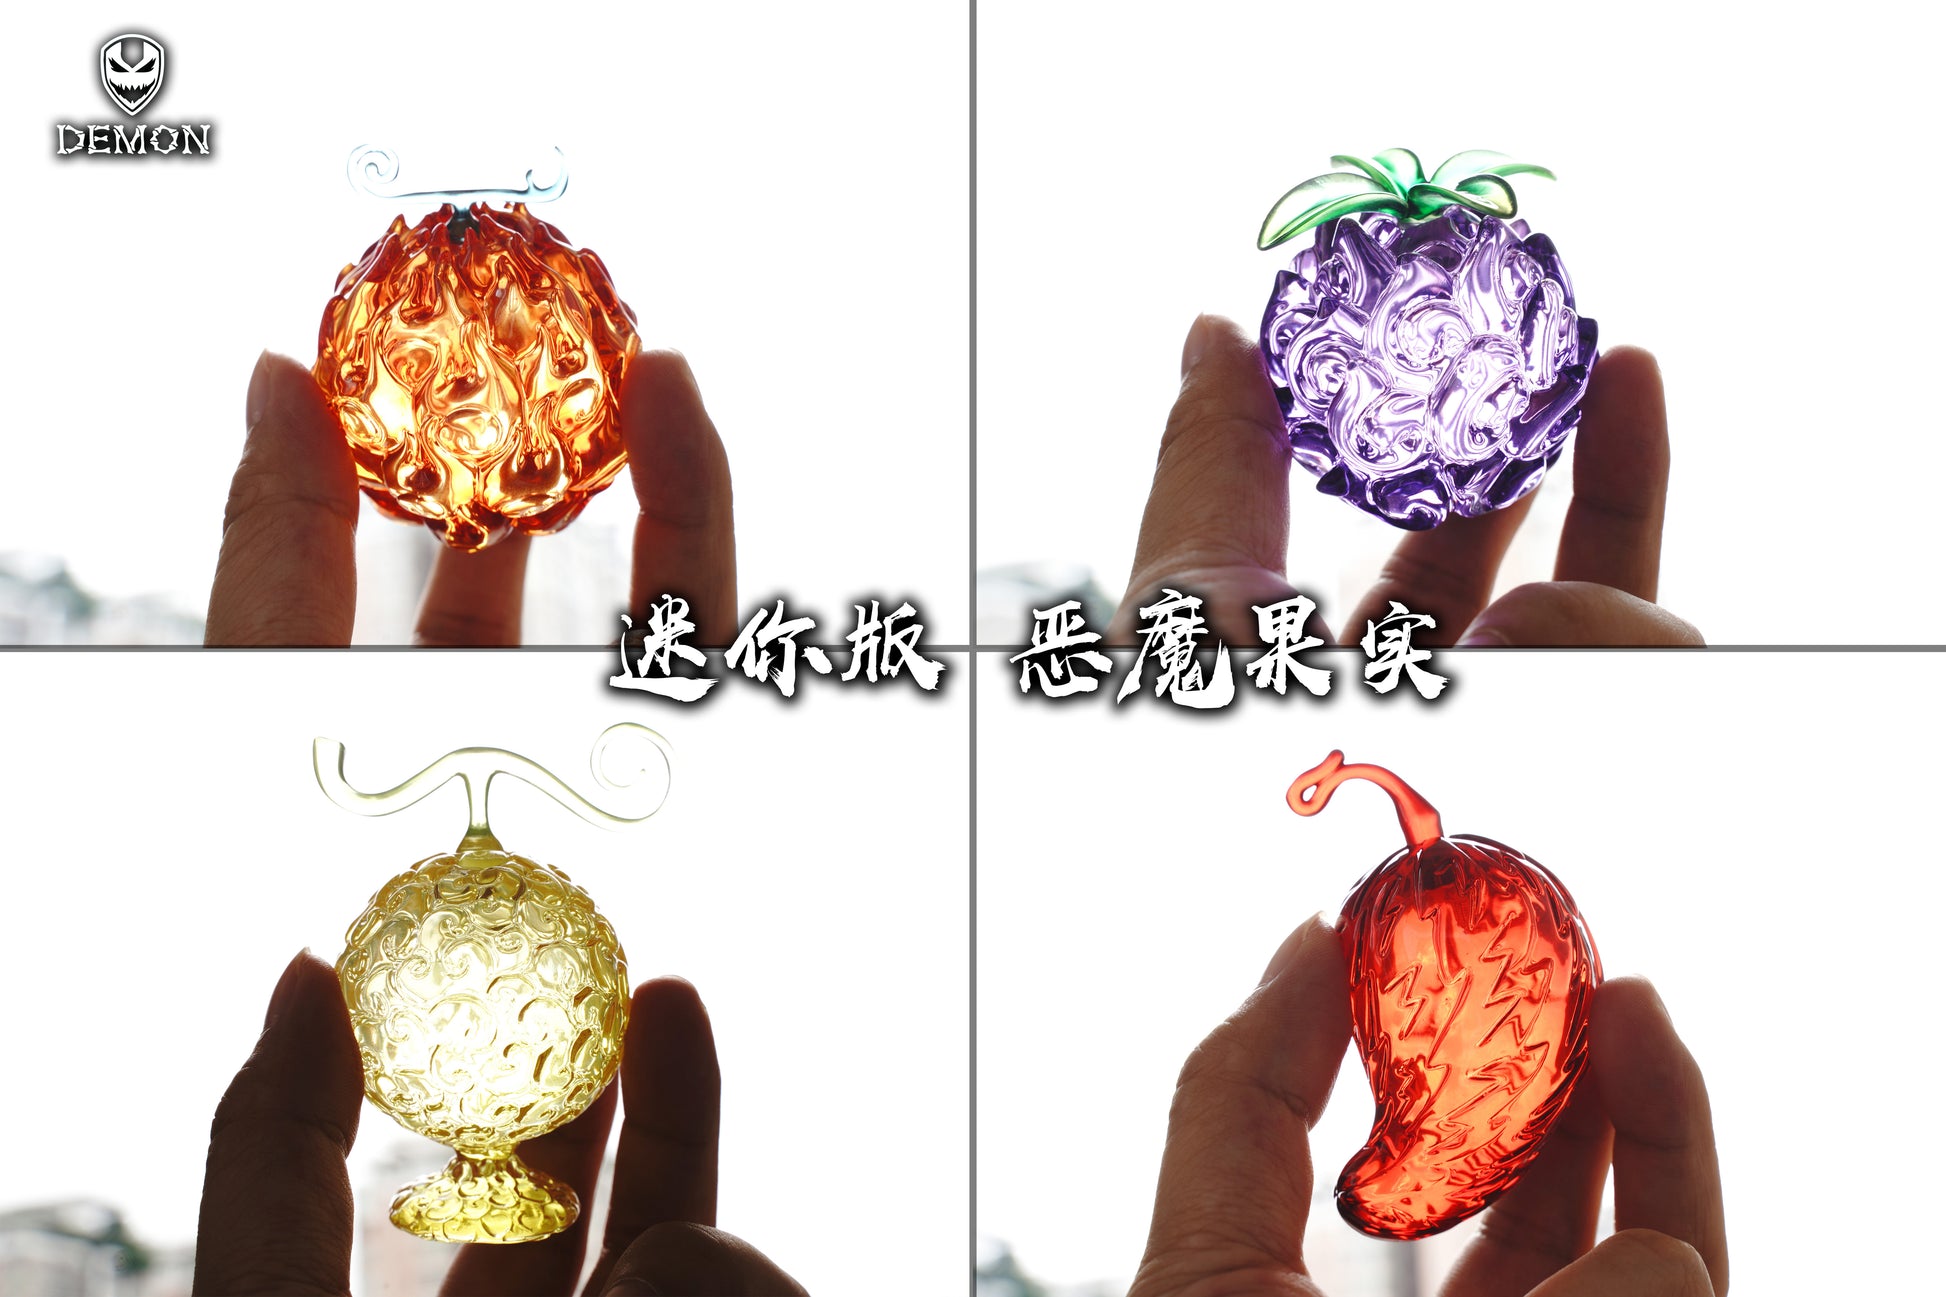 Demon Studio One Piece Enel Goro Goro no mi Fruit Devil Fruits Resin Figure  GK